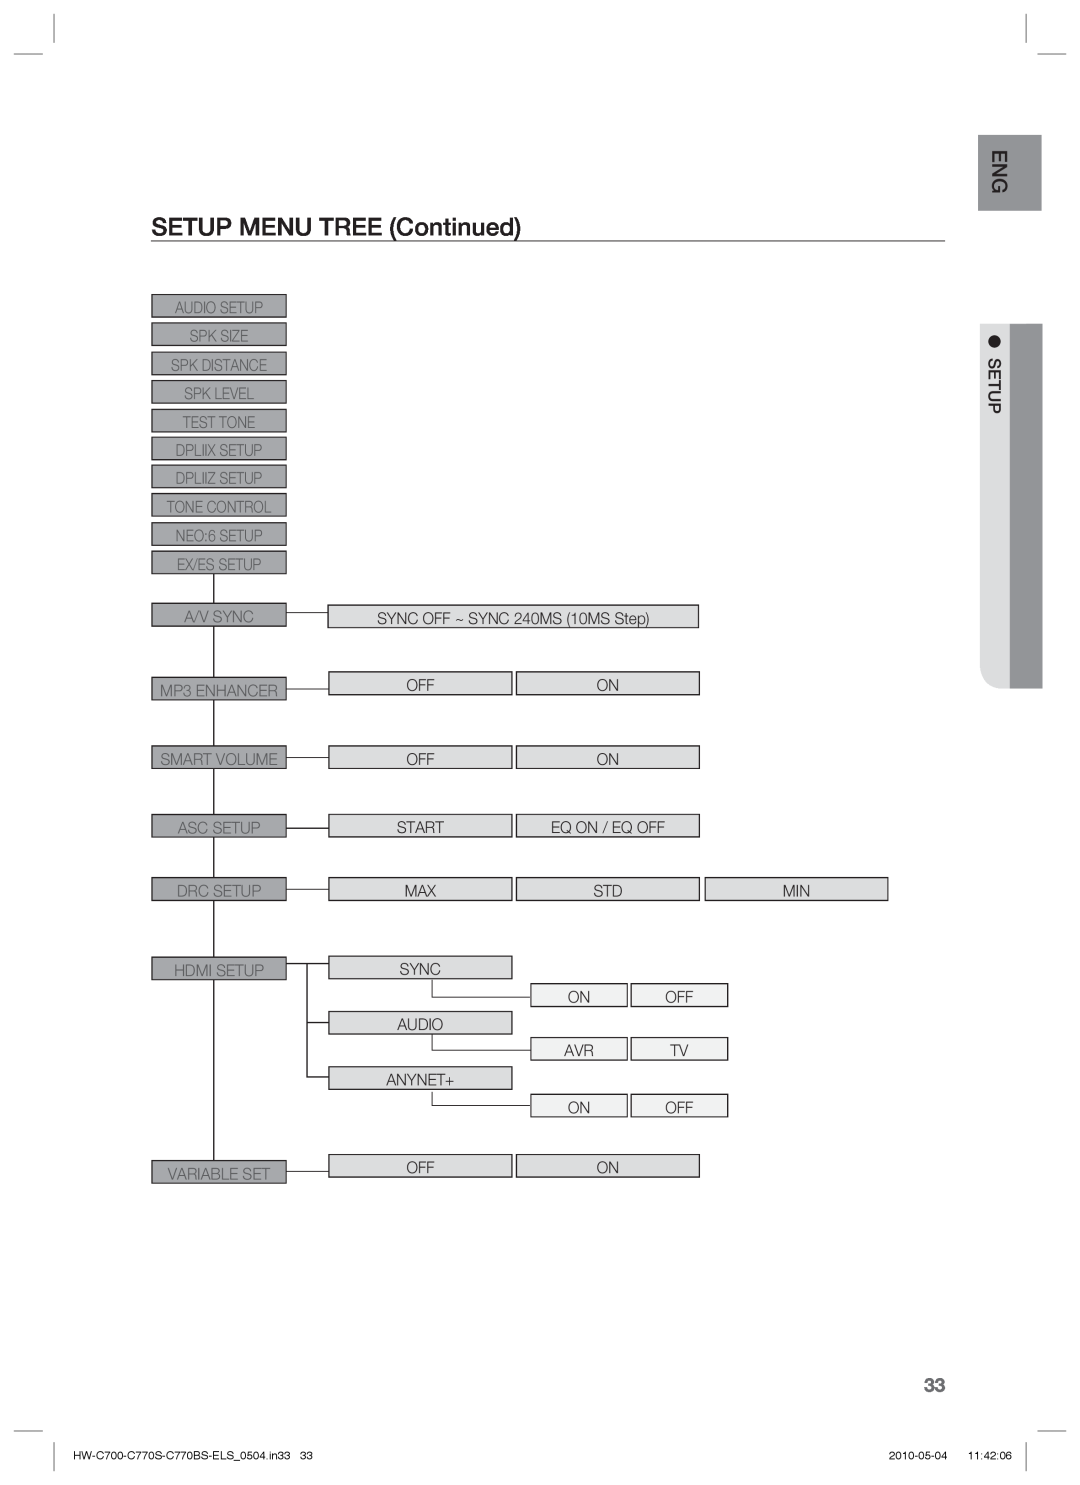 Samsung HW-C700B/XEE manual SETUP MENU TREE Continued, Audio Setup Spk Size Spk Distance Spk Level Test Tone Dpliix Setup 